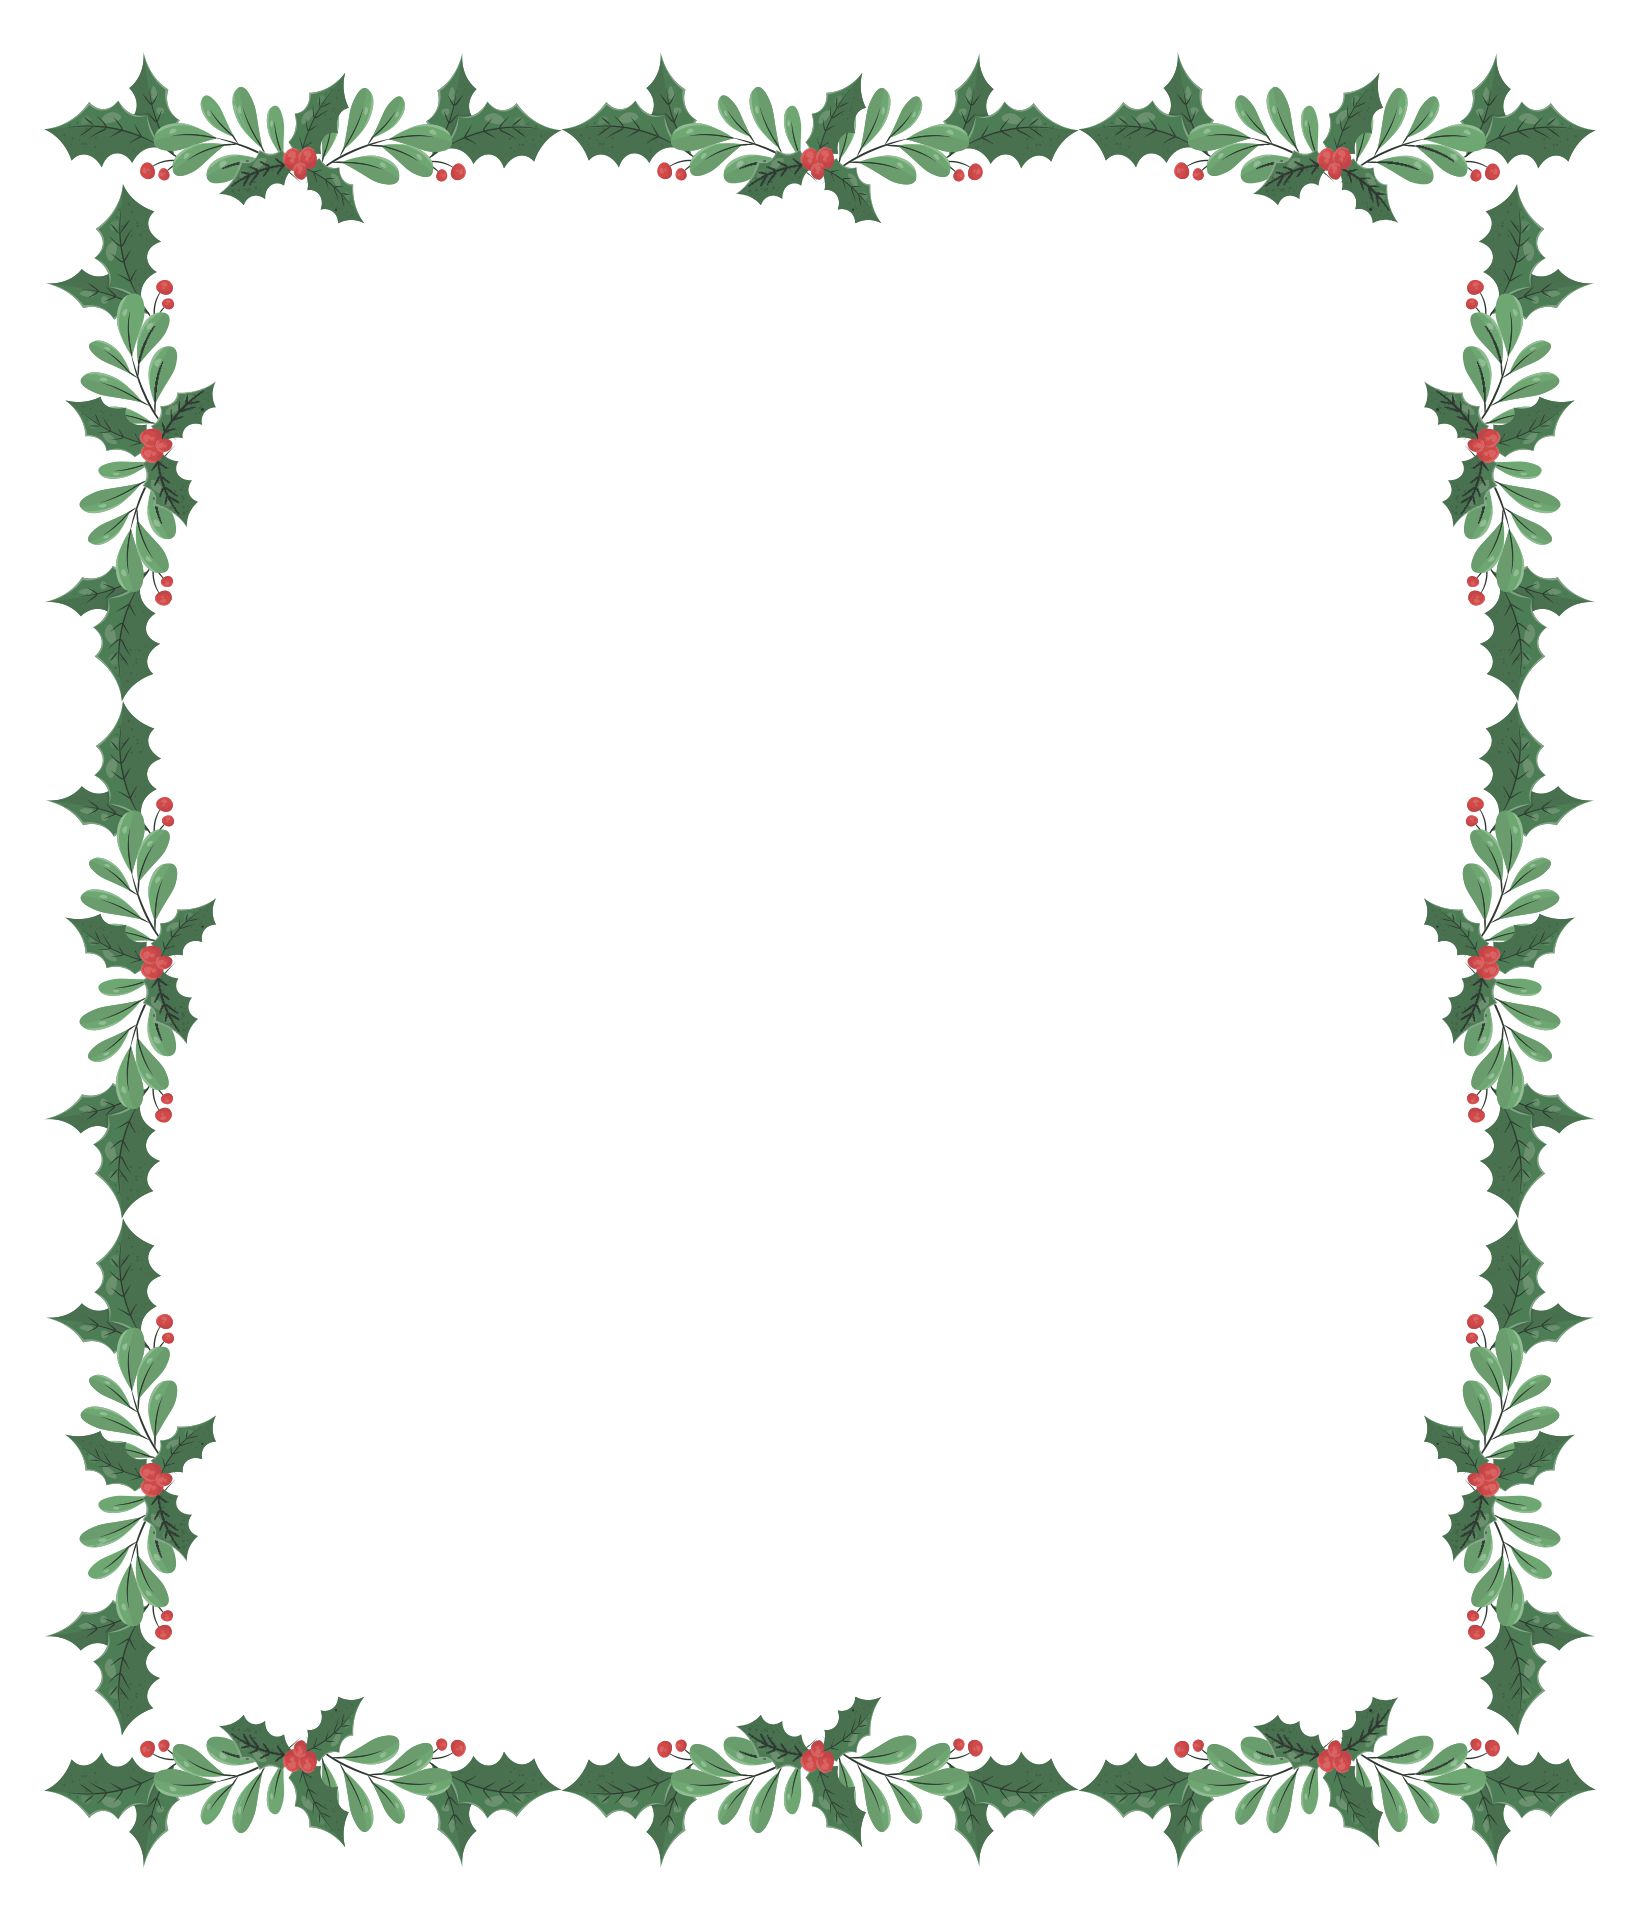 Free Printable Christmas Stationery Borders - Printable Templates by Nora